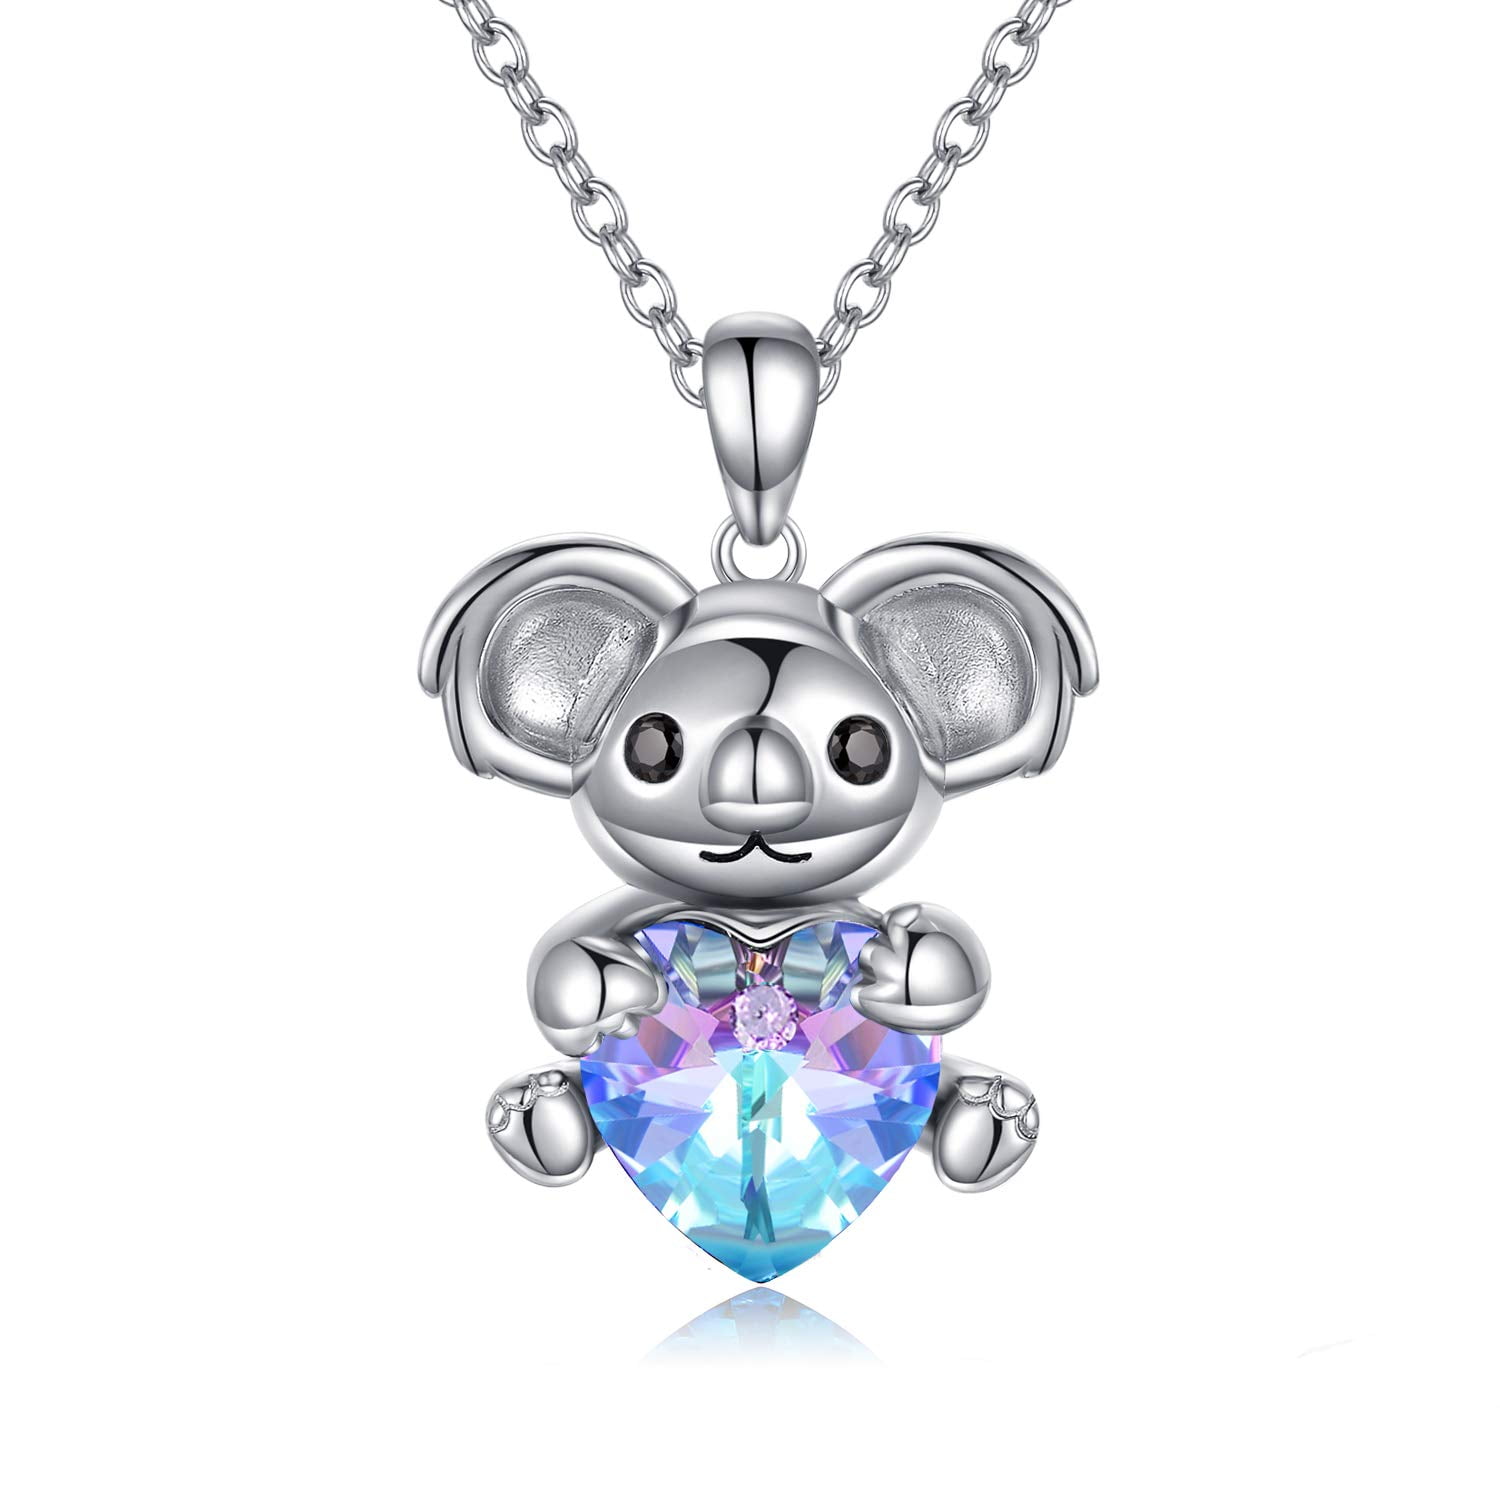 Aineecy Cute Koala Bear Necklace Lovely Pet Animal Choker Clavicle Chain Necklace for Women Teen Girls Koala Animal Lover Jewelry